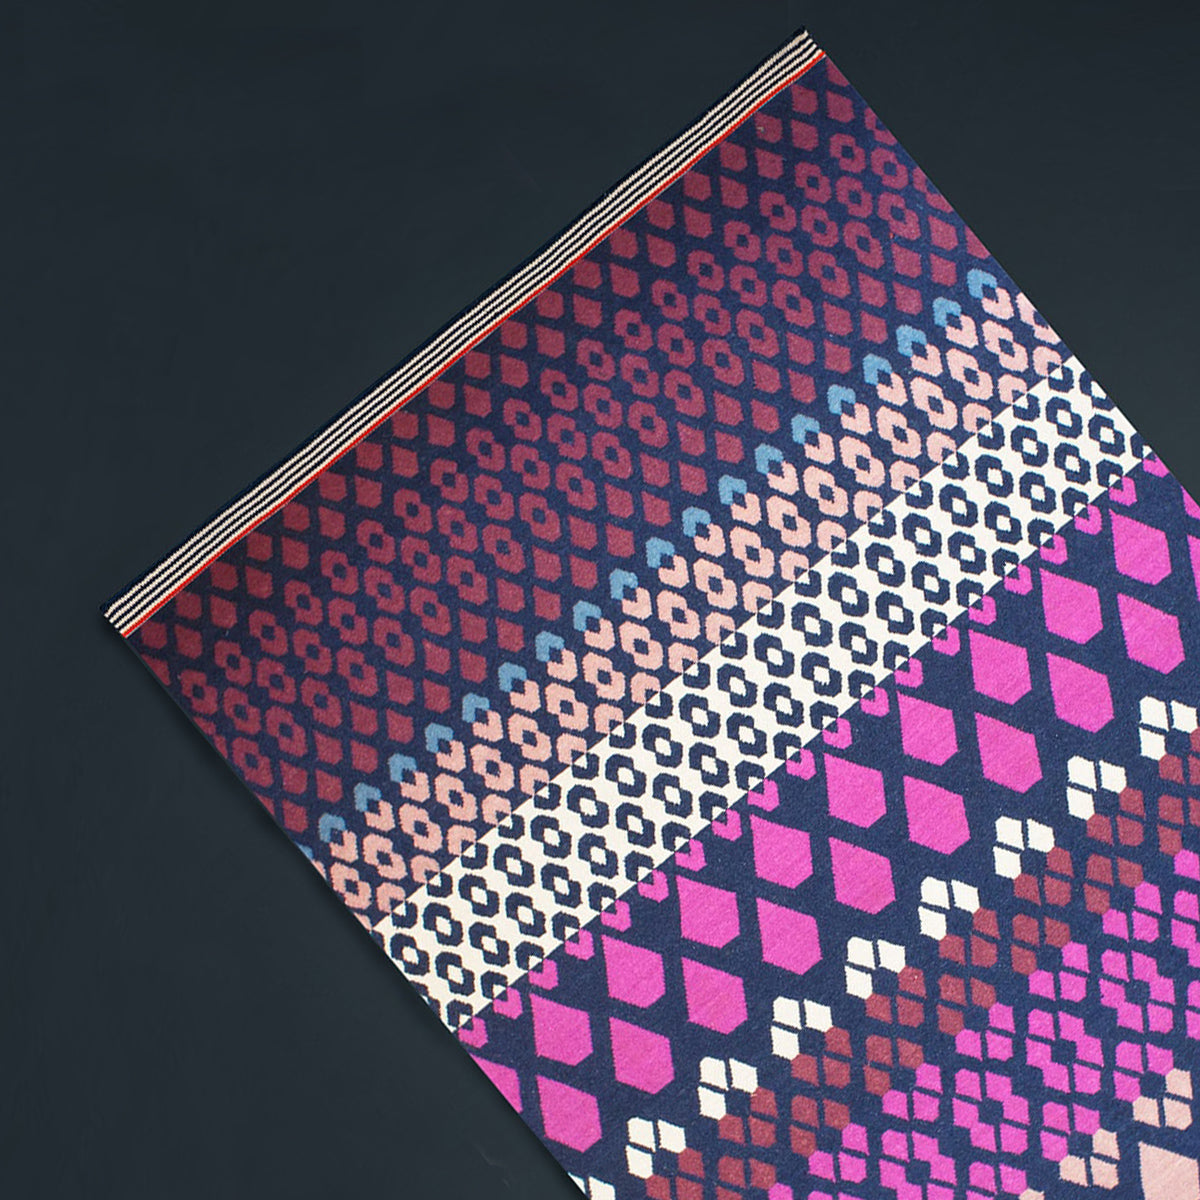 Geometric pattern, colourful rugs, designer rugs, luxury rugs, wool rugs, geometric rug, modern ruga, pink rug, blue rug, purple rug